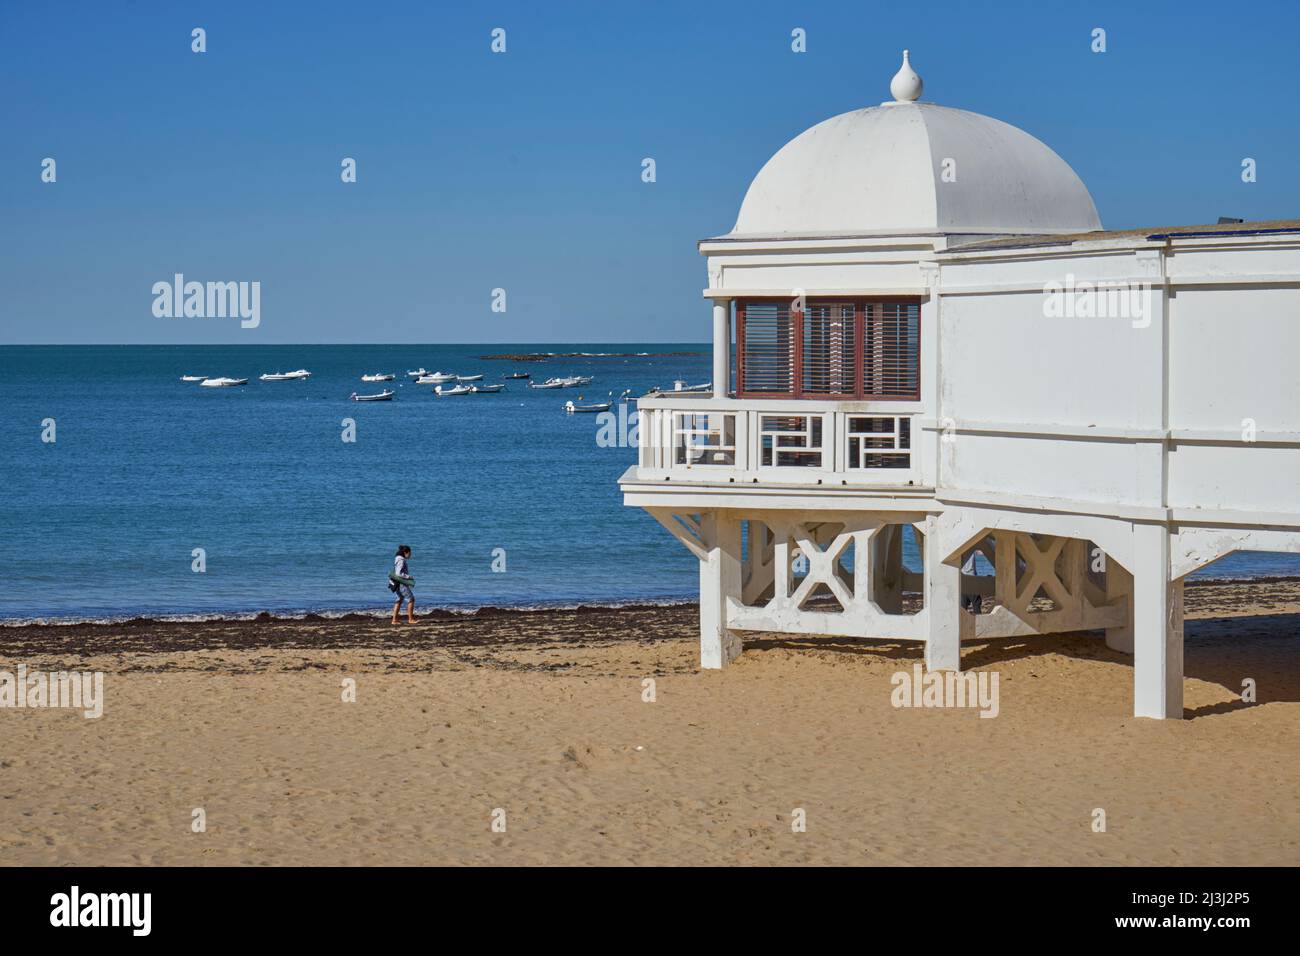 Pavillon, plage de la Caleta, Costa de la Luz, Cadix, Espagne Banque D'Images